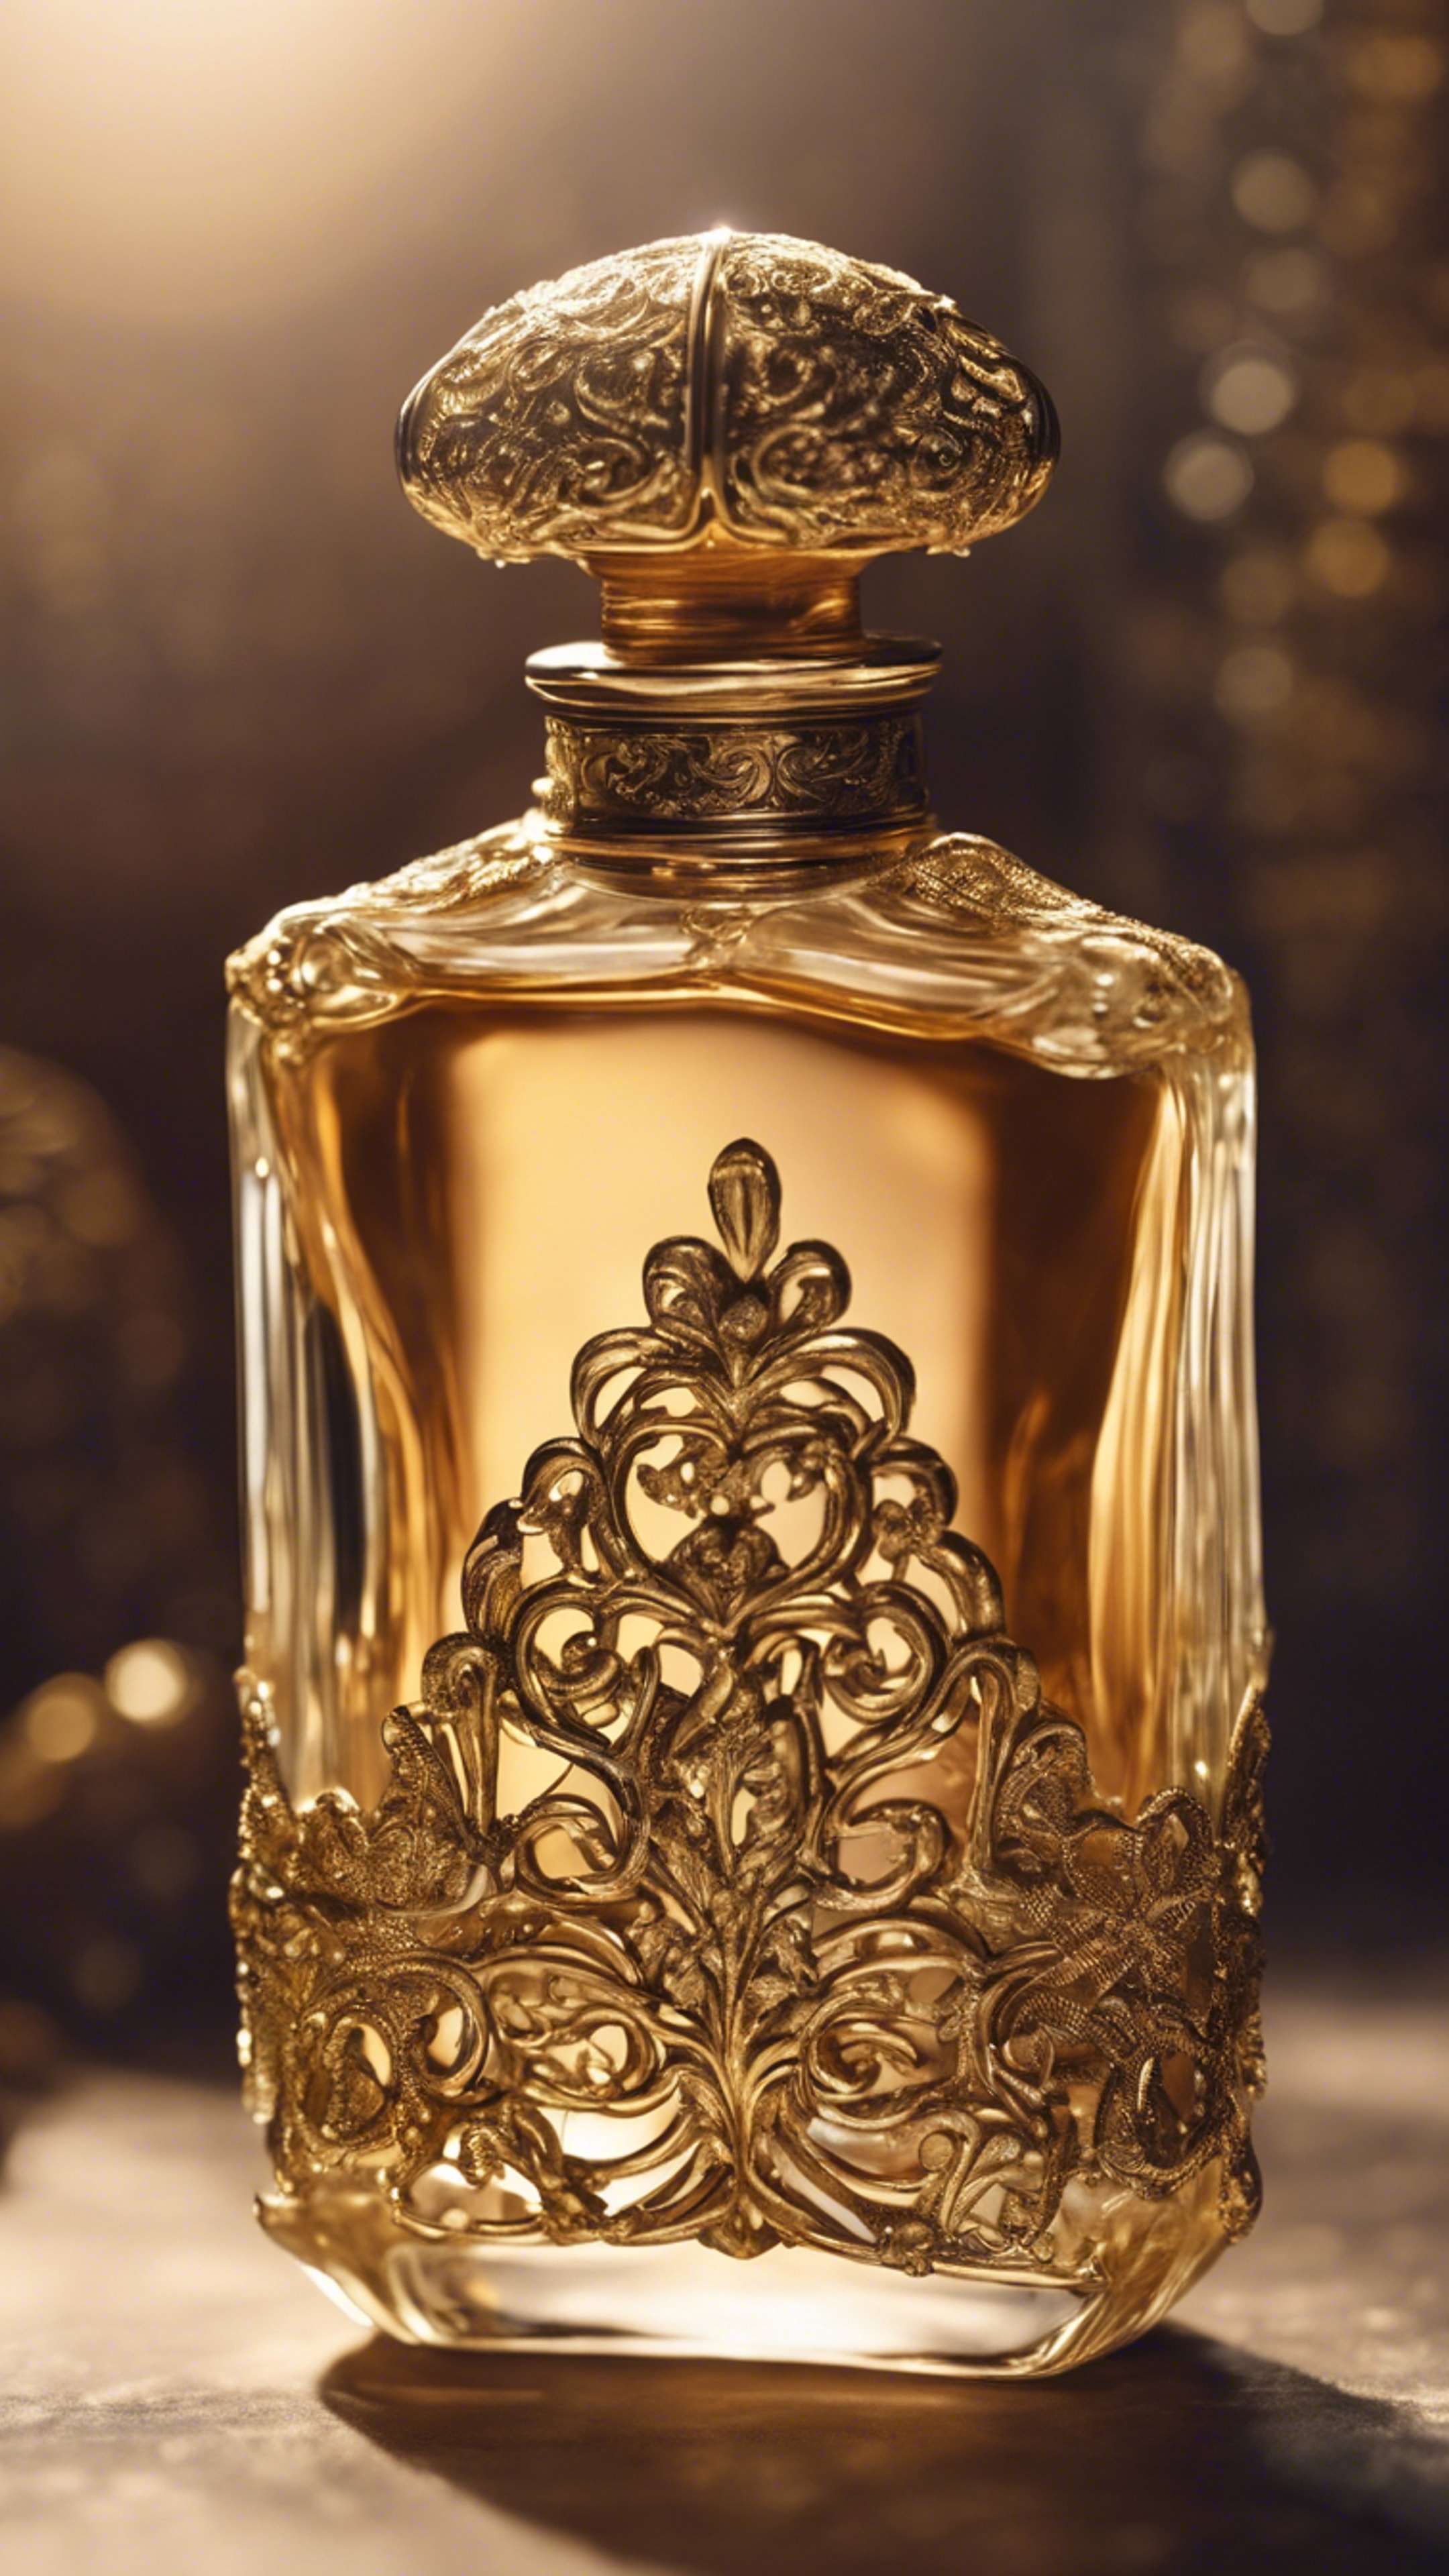 An antique perfume bottle with delicate gold filigree luxury cosmetic item. duvar kağıdı[fe361f22190a4891a6d9]